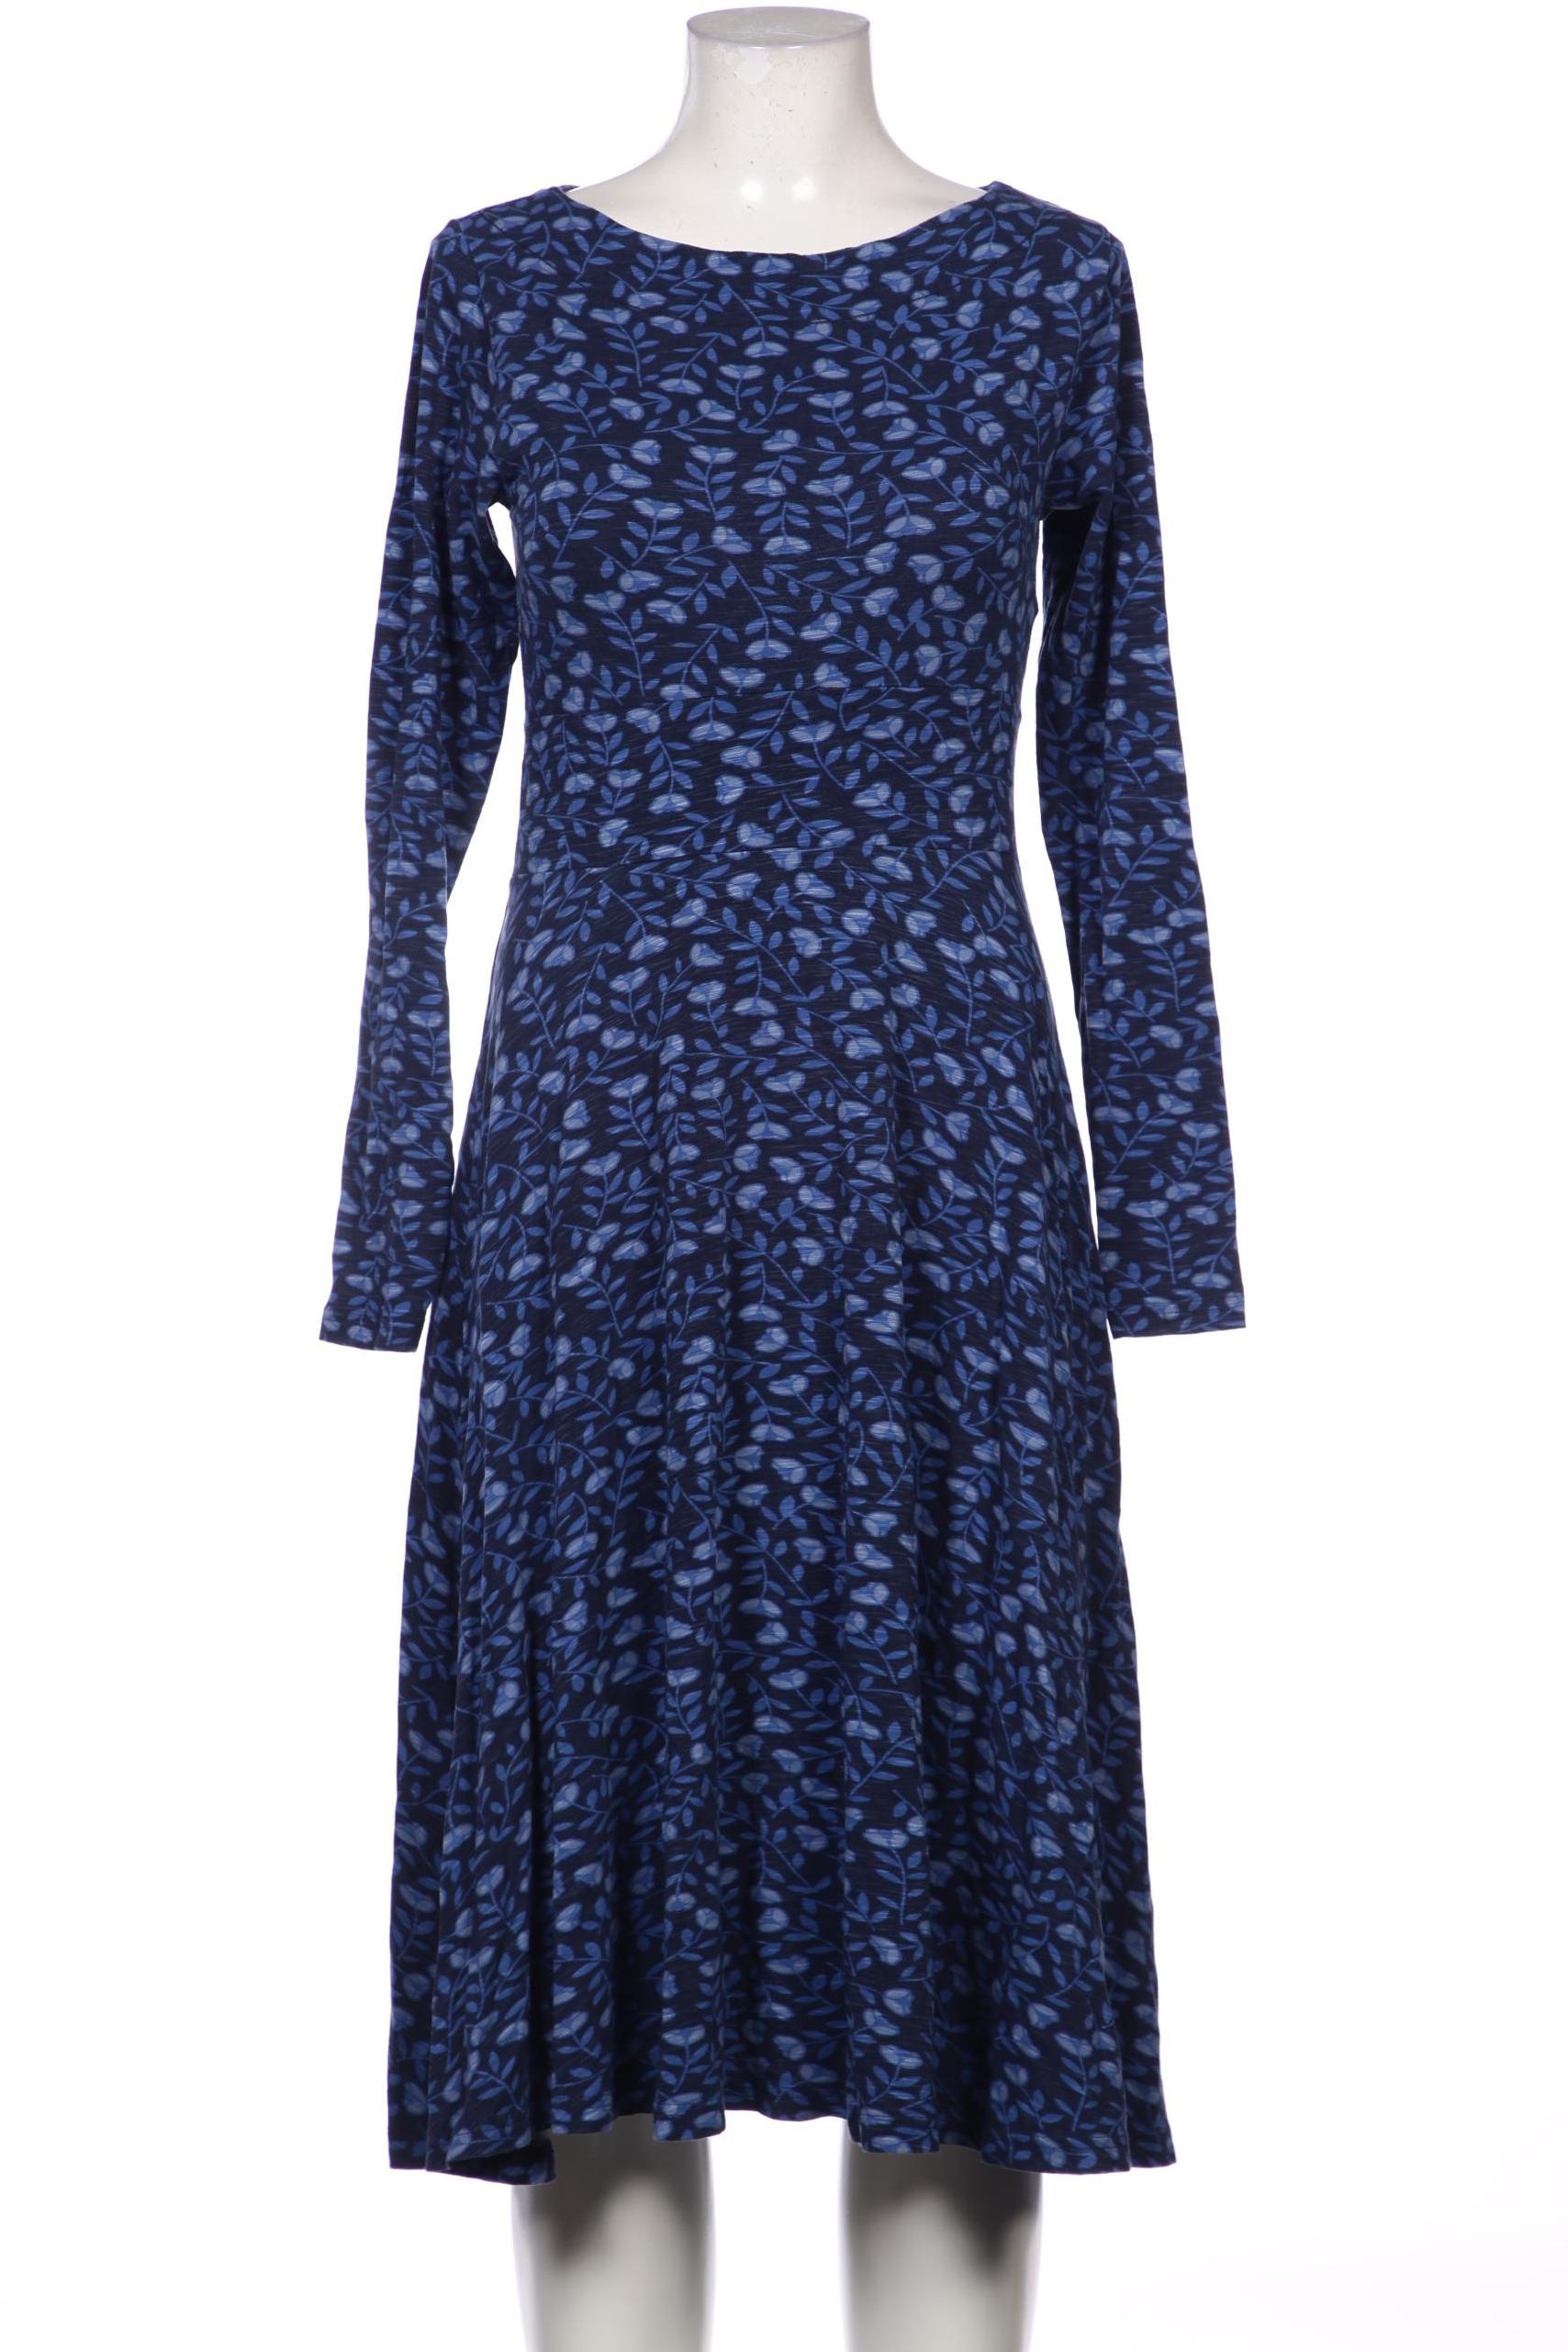 Danefae Damen Kleid, marineblau, Gr. 38 von Danefae